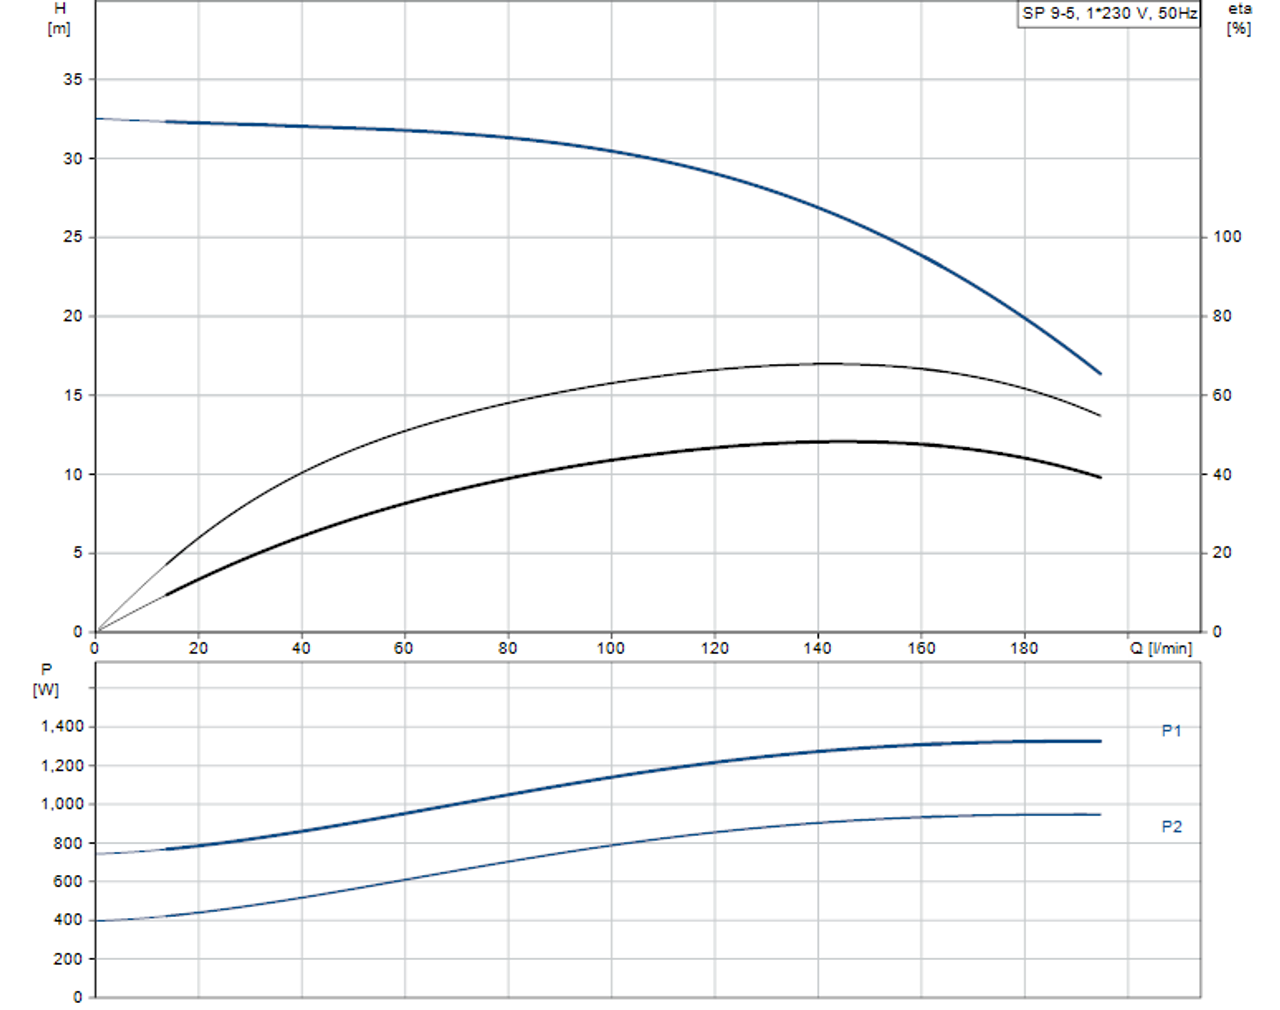 SP 9-5 Performance Curve